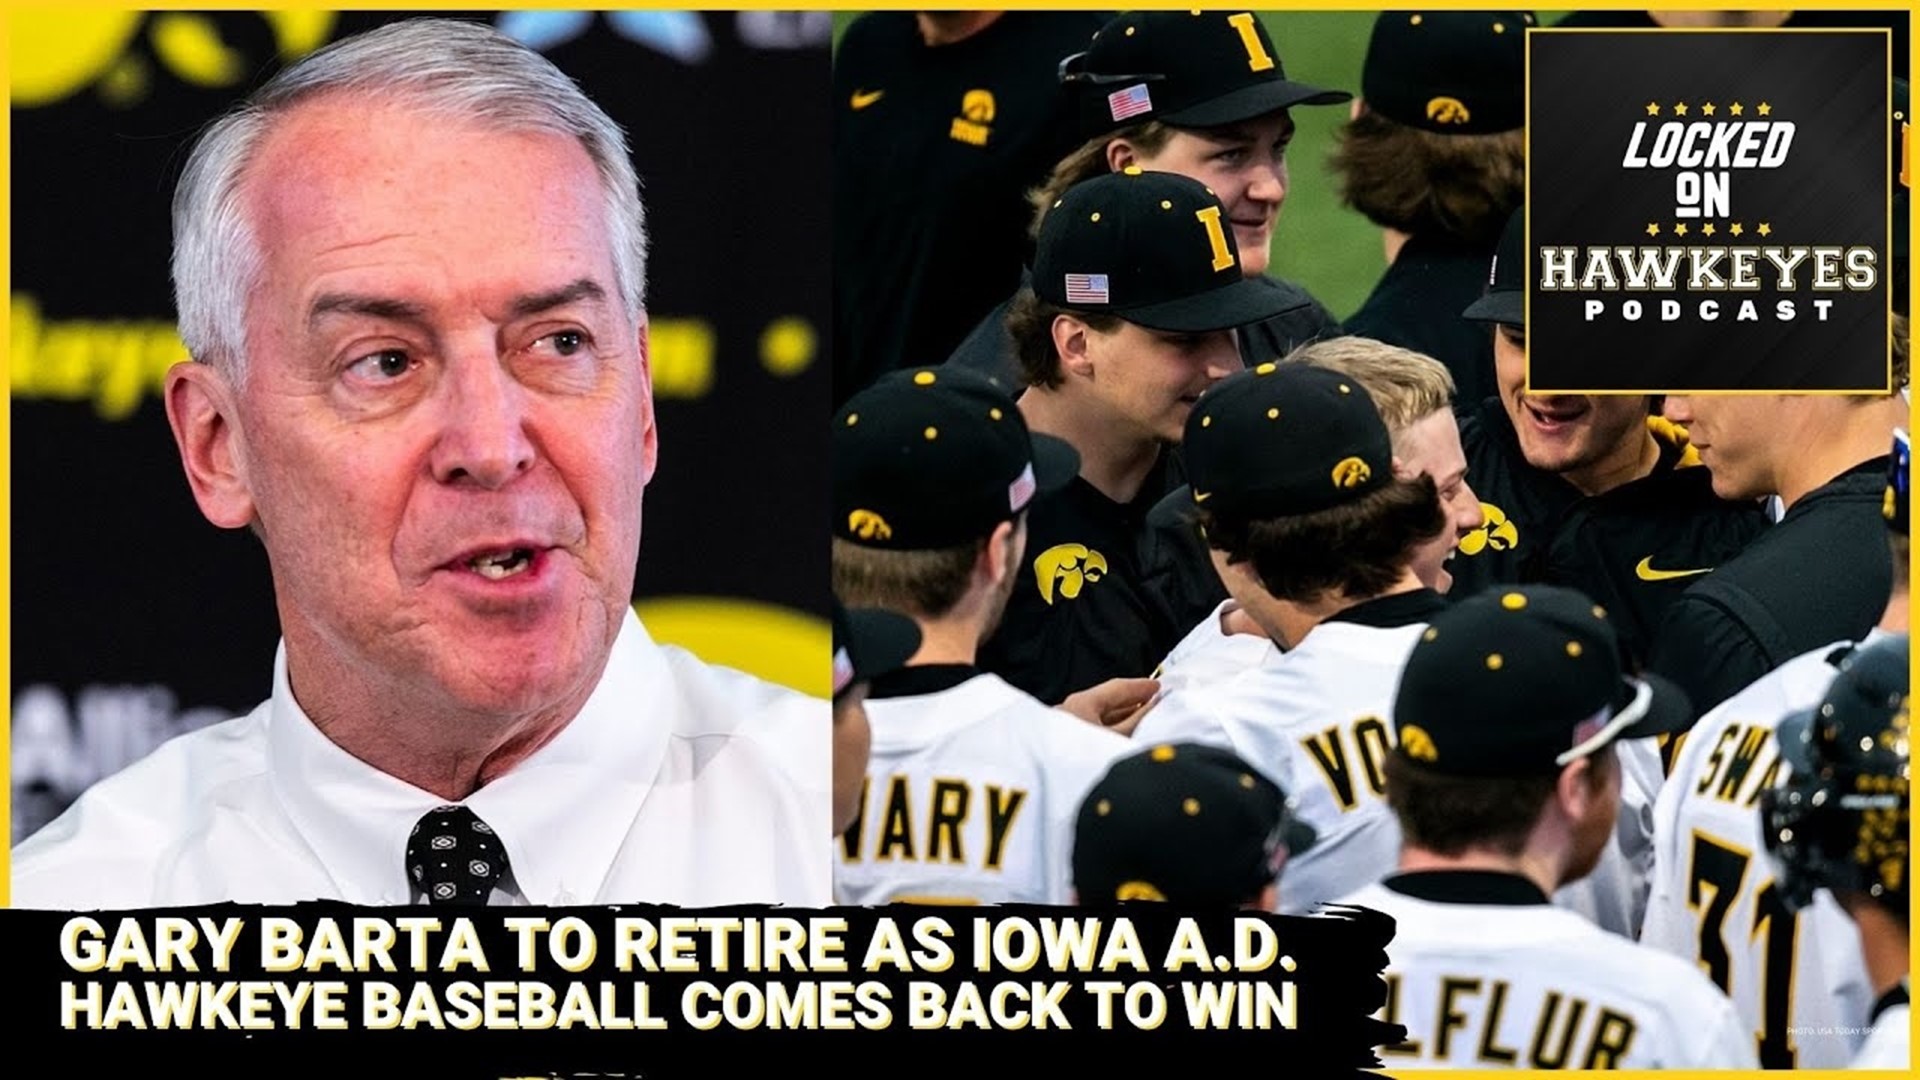 Gary Barta to retire as Iowa Athletic Director, Iowa baseball comes back to win